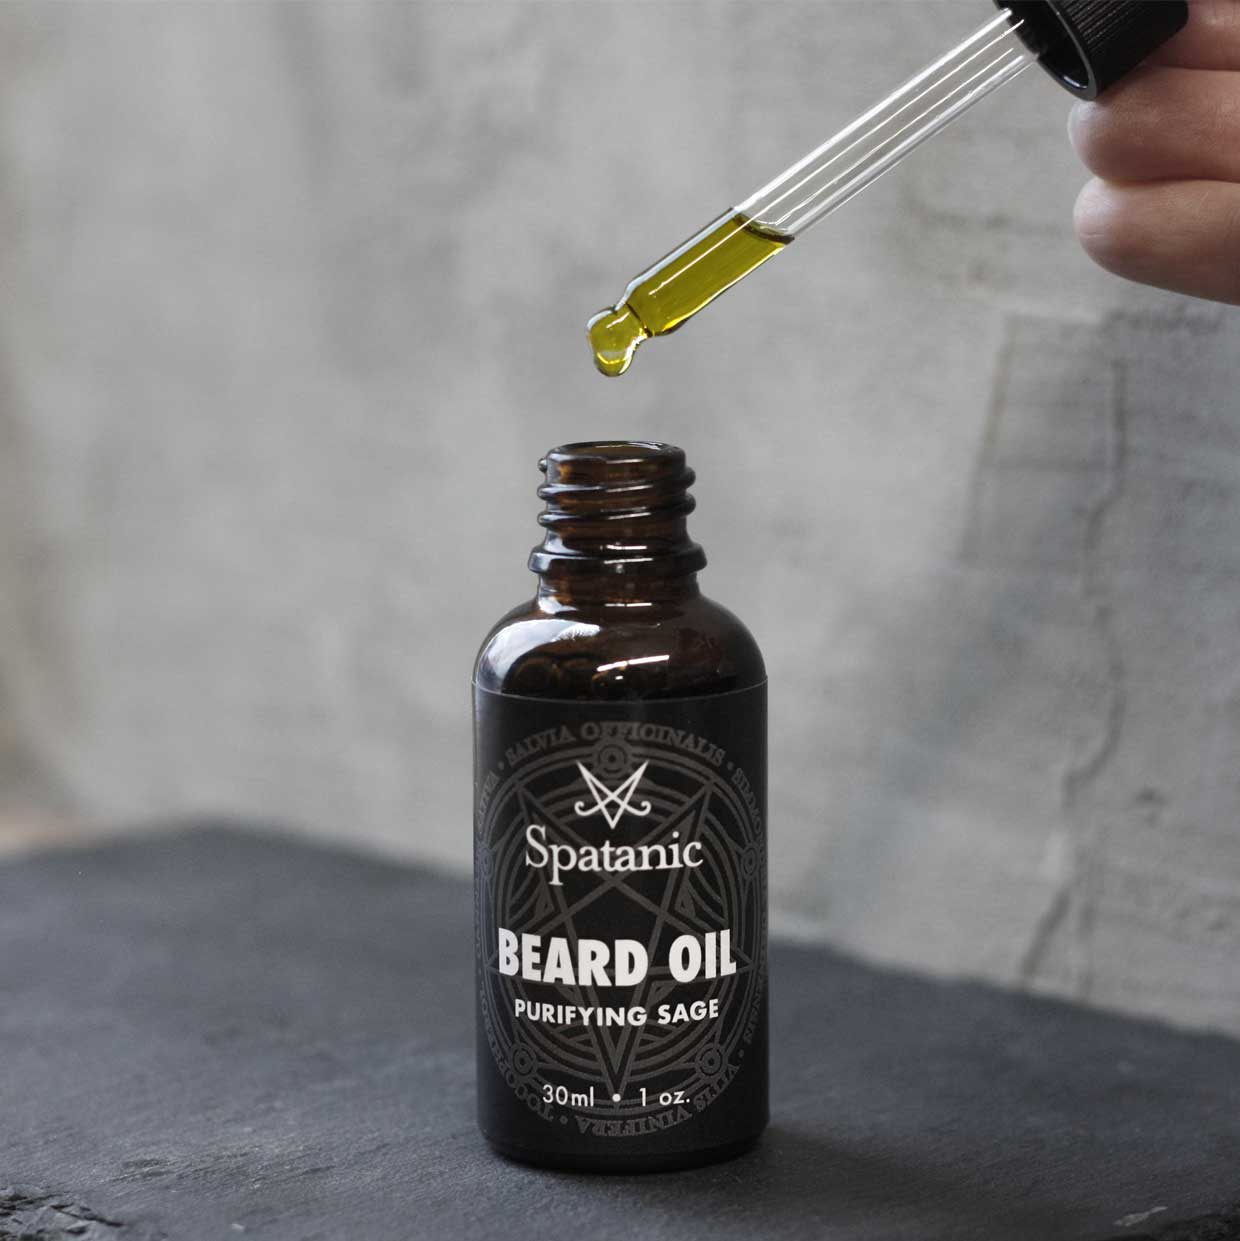 Beard Oil, 30 ml